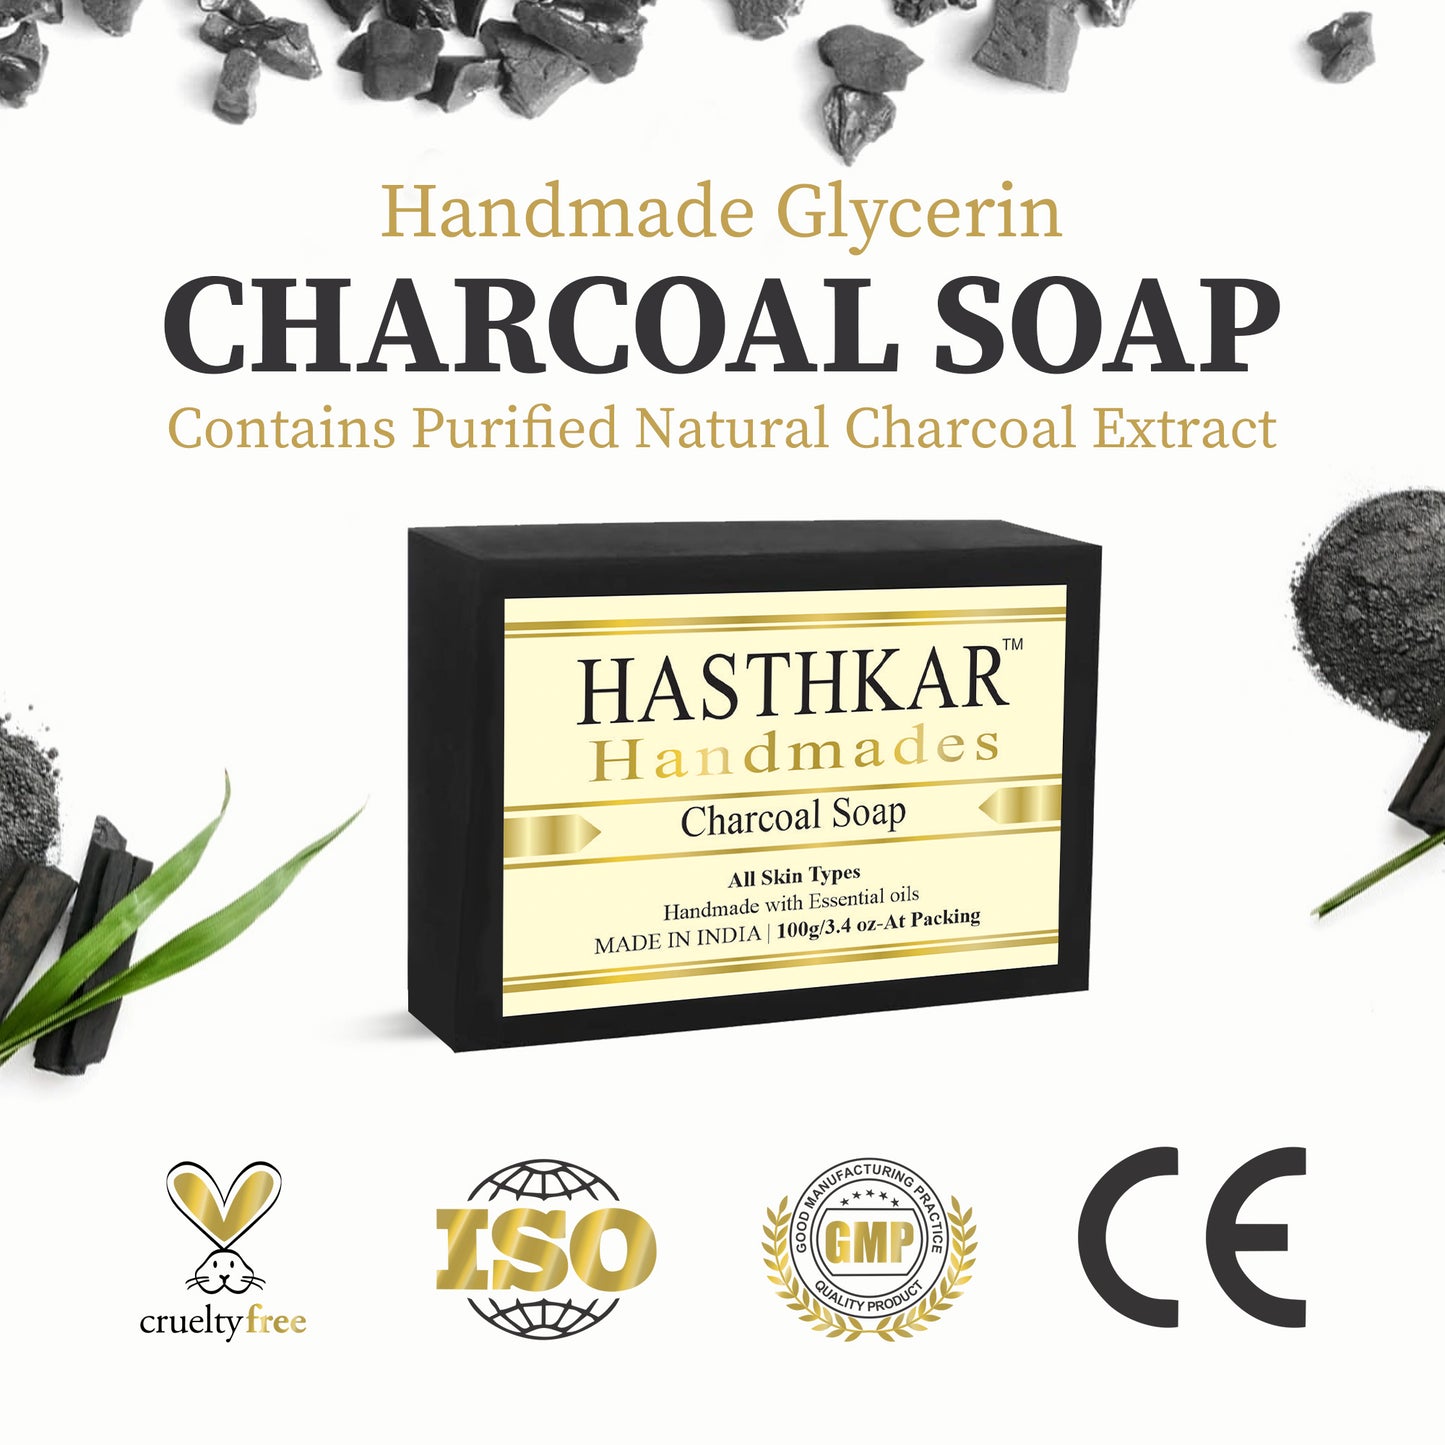 Hasthkar Handmades Glycerine Charcoal Soap 100gm Pack of 5